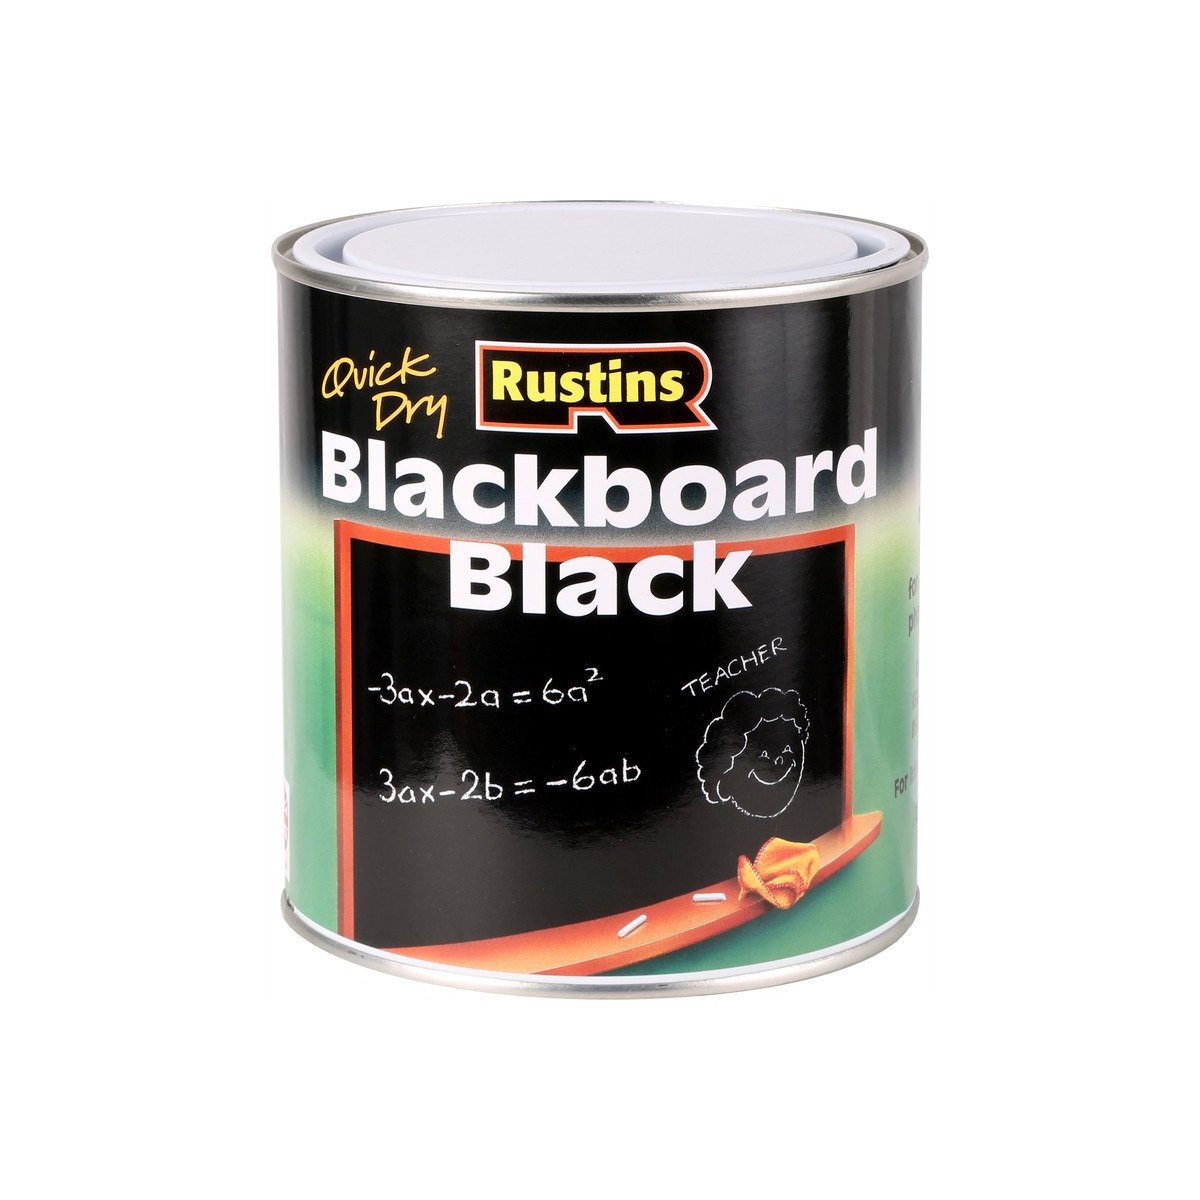 Rustins Quick Dry Blackboard Paint Black 1 Litre